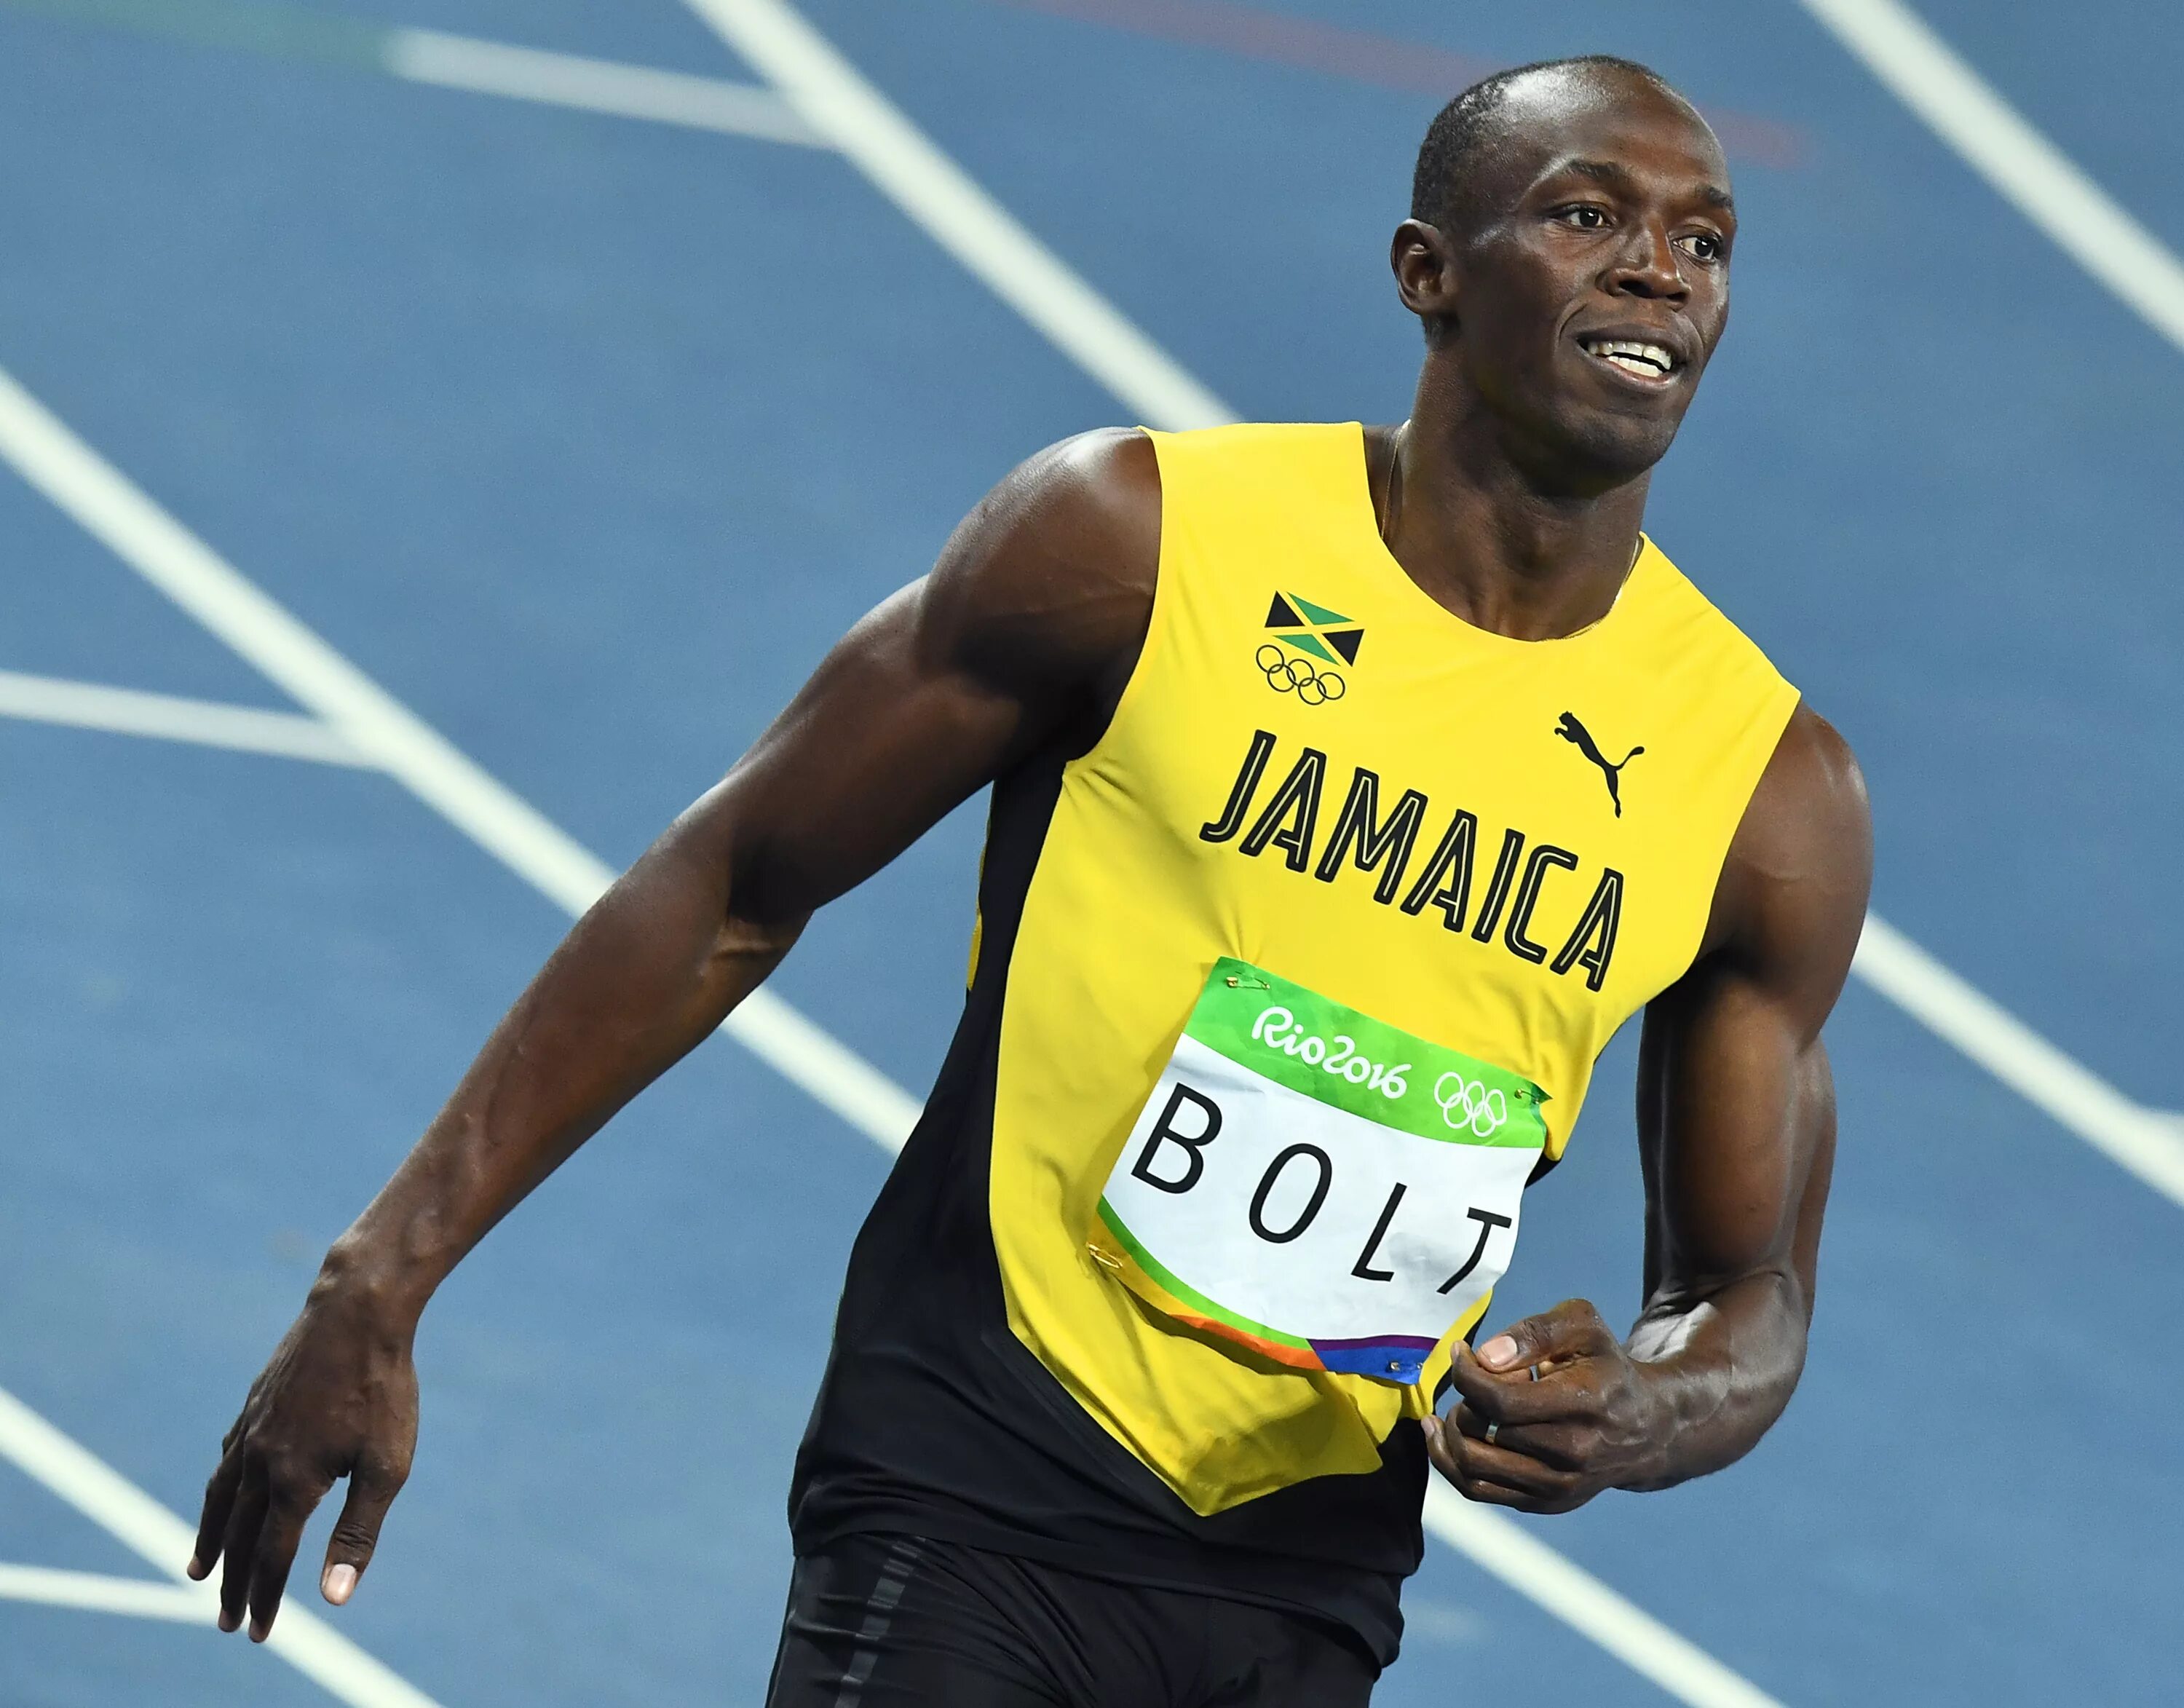 Ectbyn ,JK. Useyn BOLRT. Usain Bolt. Усейн болт 9.58 футболе. Ямайский бегун рекордсмен